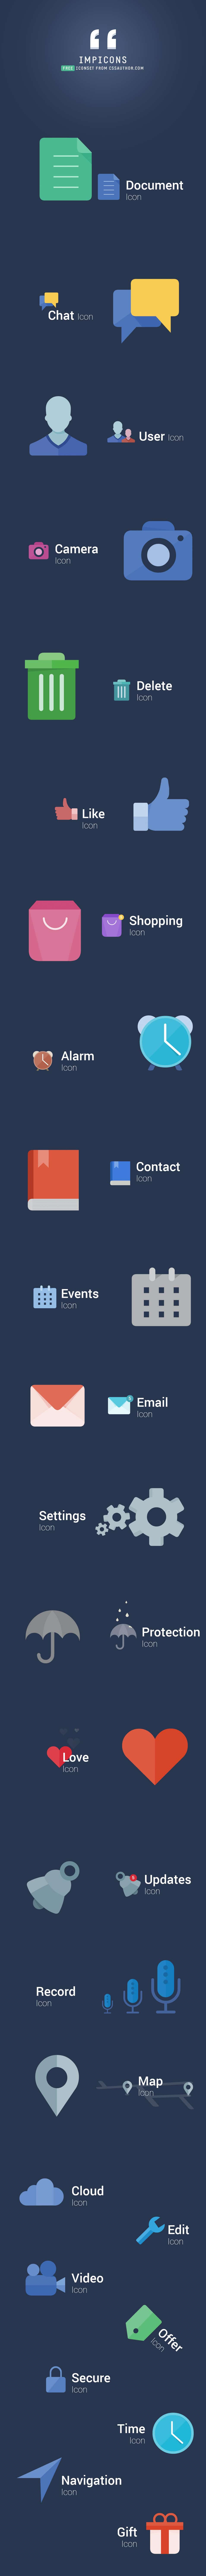 IMPICONS - Modern Flat style Free Icon Set - cssauthor.com